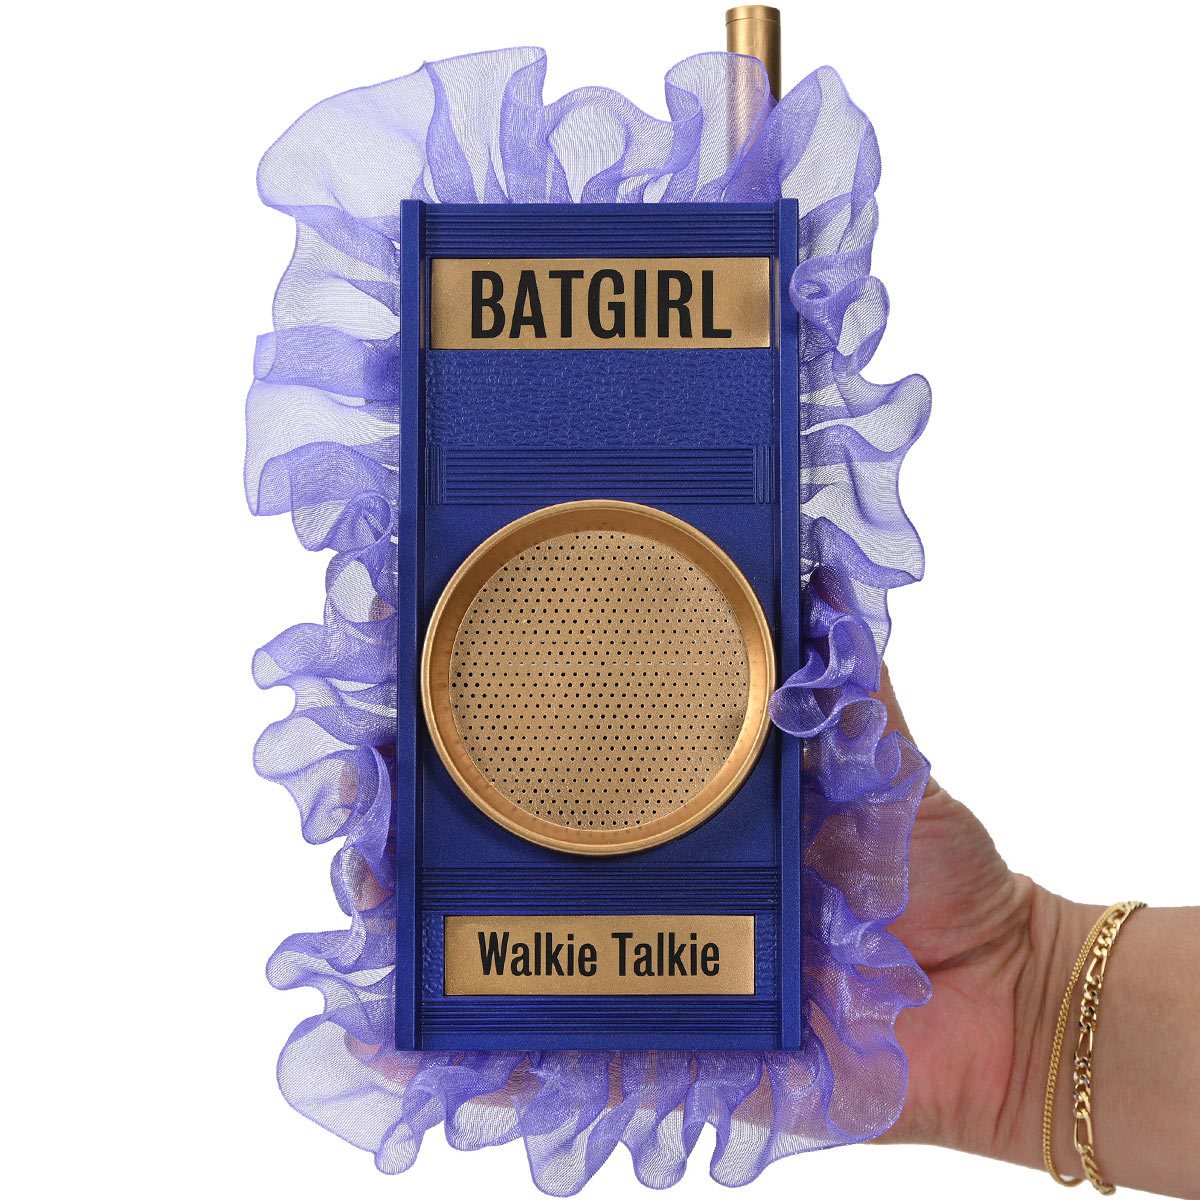 Batman 1966 Batgirl Walkie Talkie Prop Replica